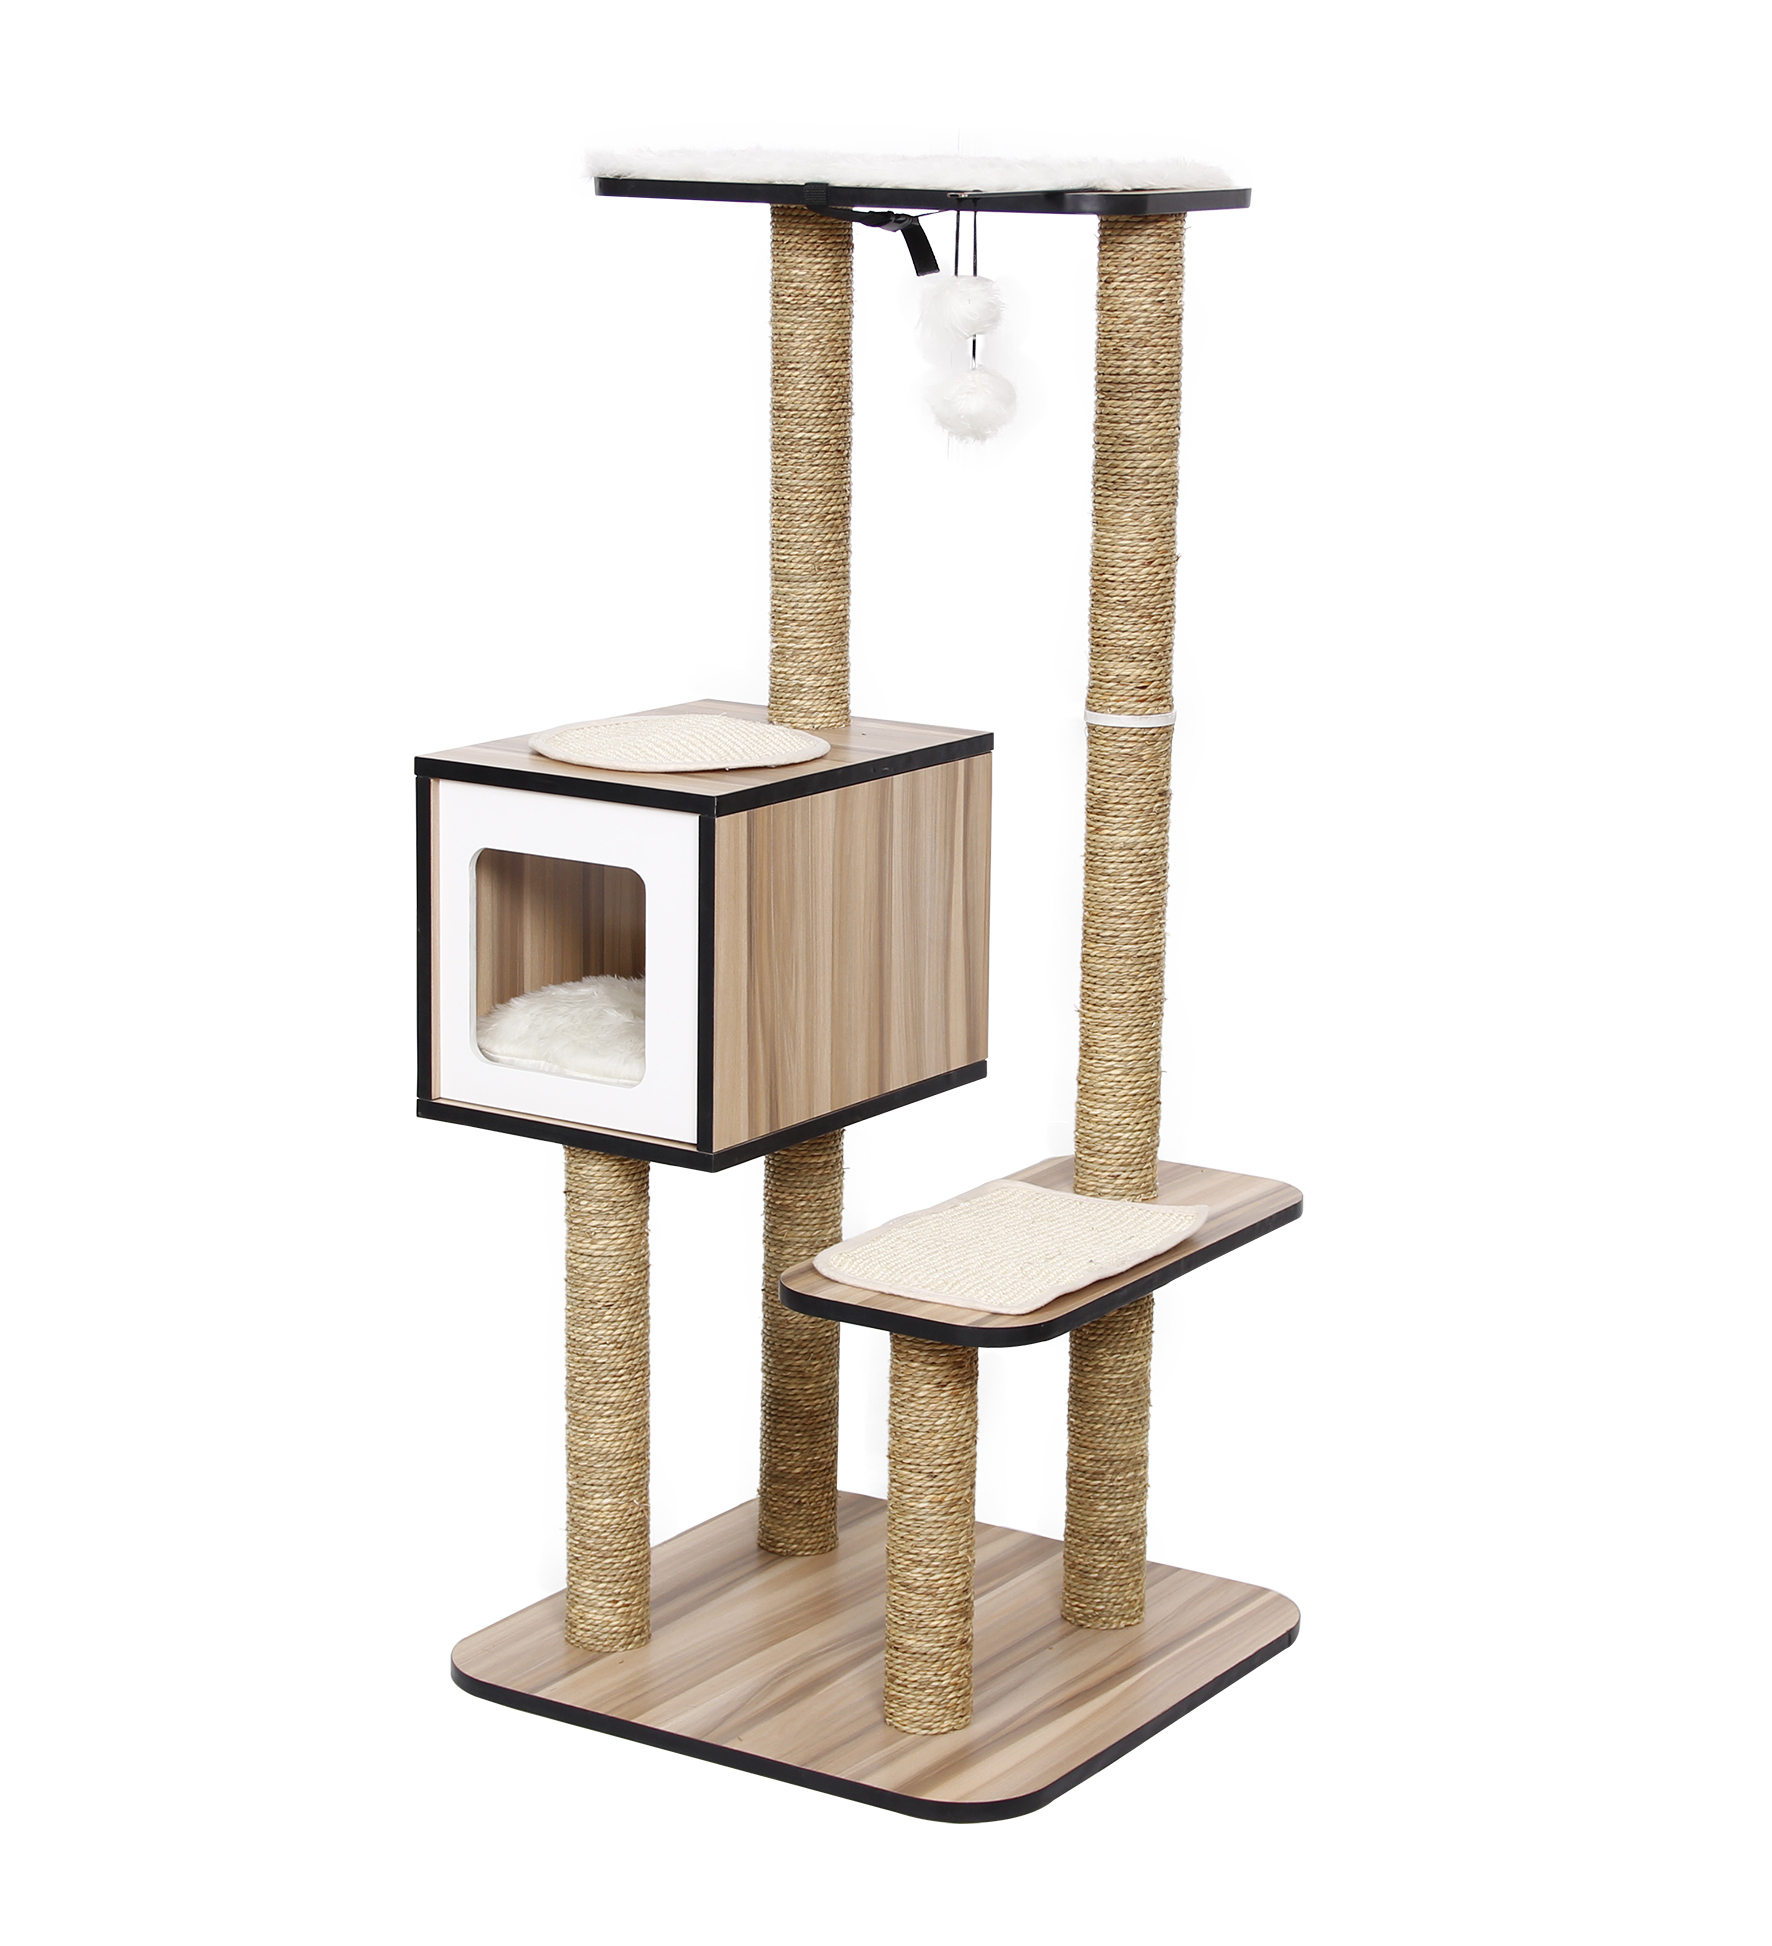 Rotating Create Style Cat Furniture Cat Tree